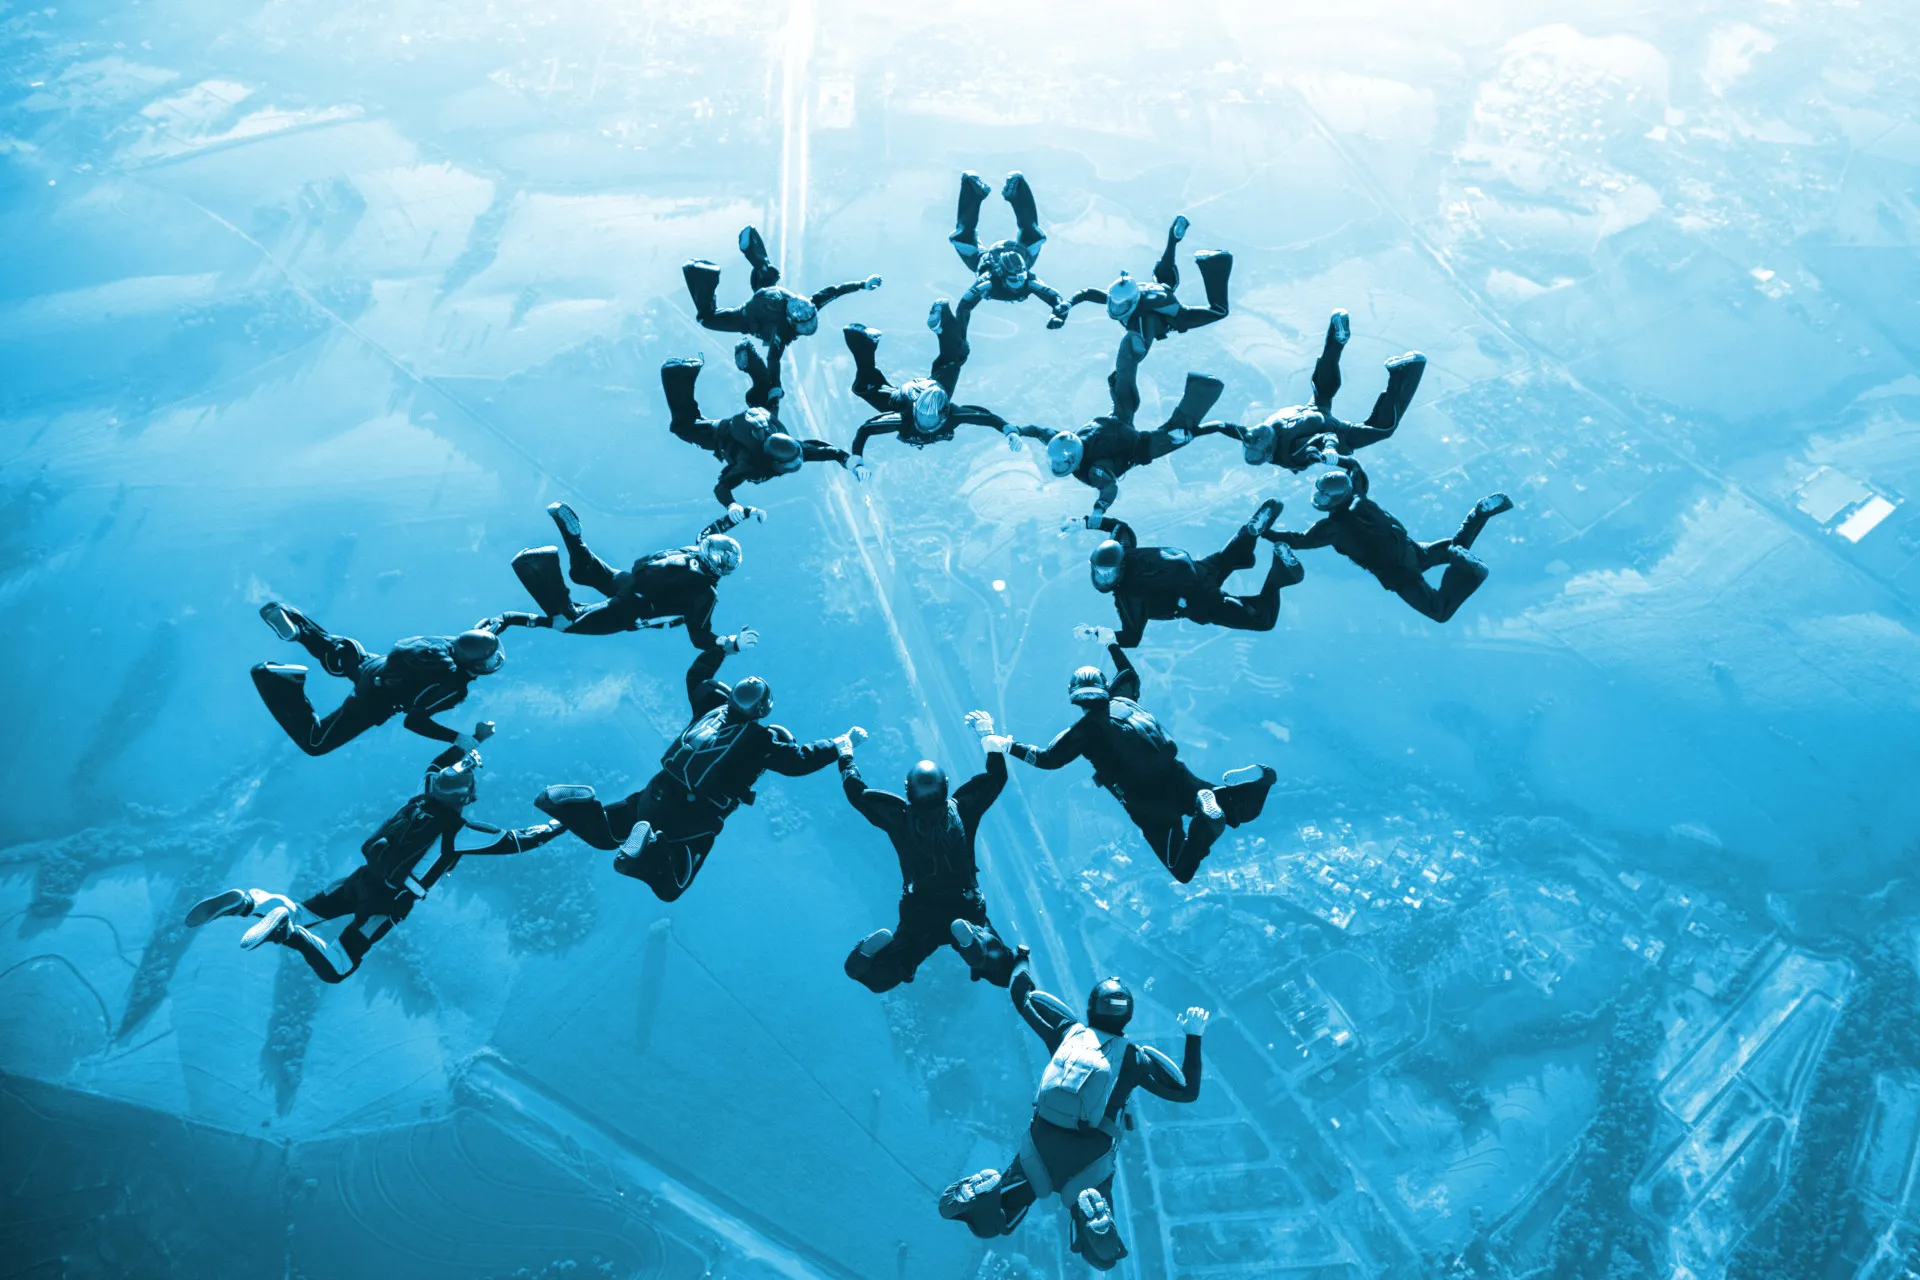 Background Image depicting agile teamwork - whilst sky-diving